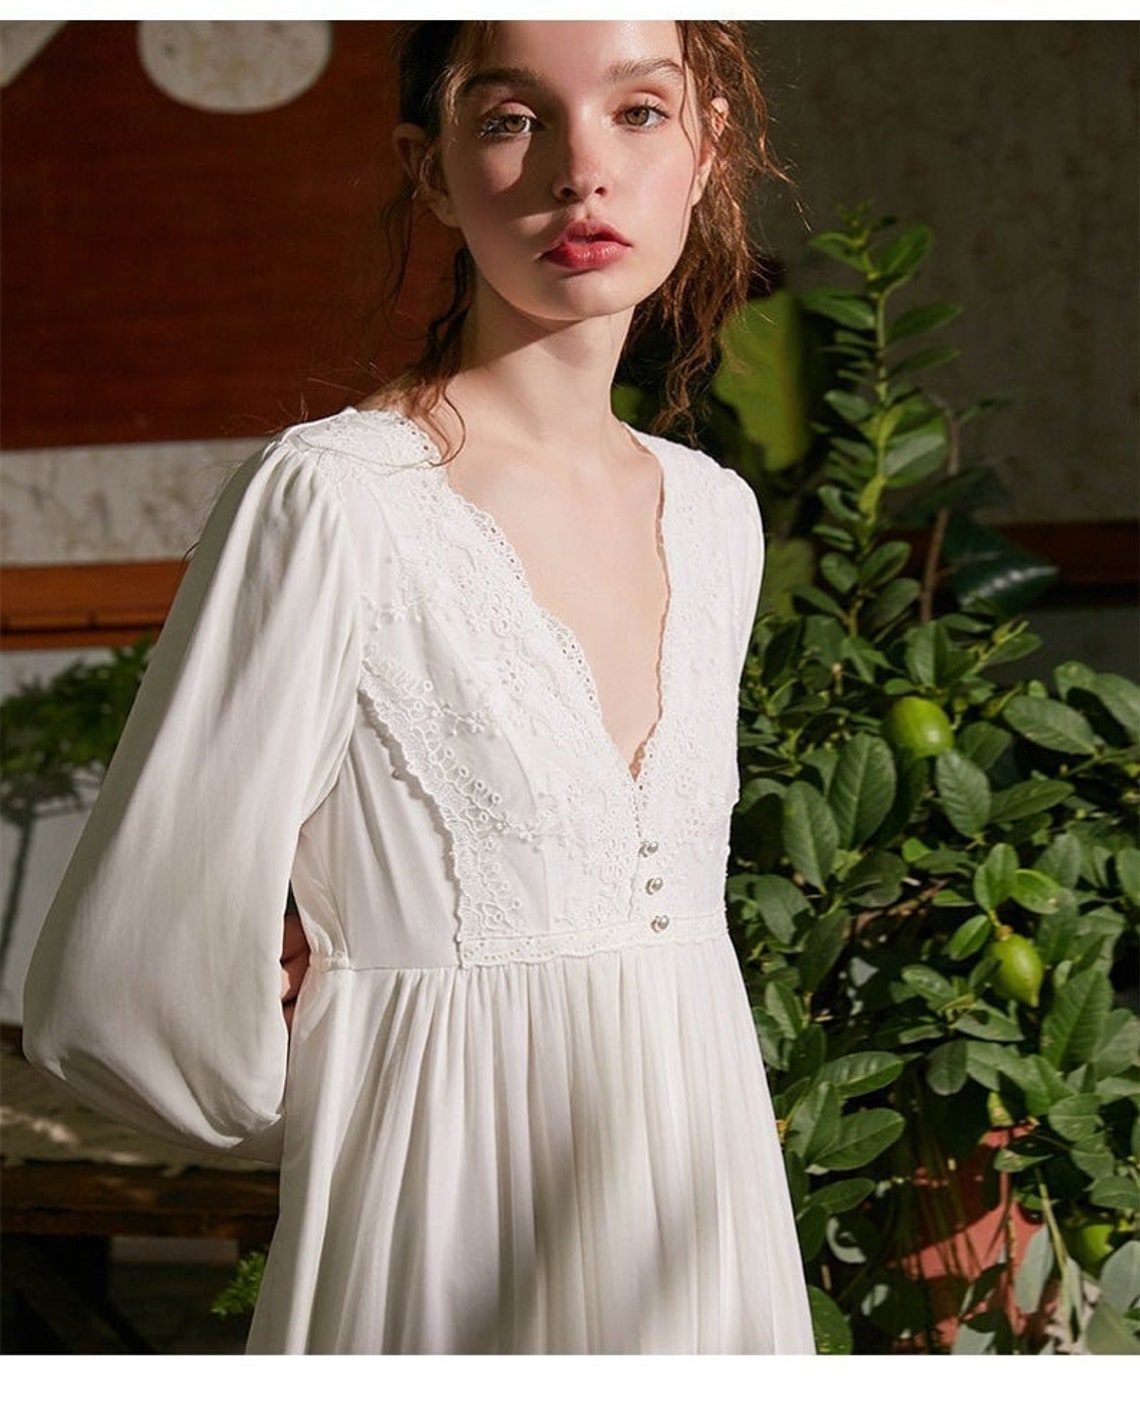 Sweet Italian Renaissance Dress Autumn Nightgown White Pink | Etsy